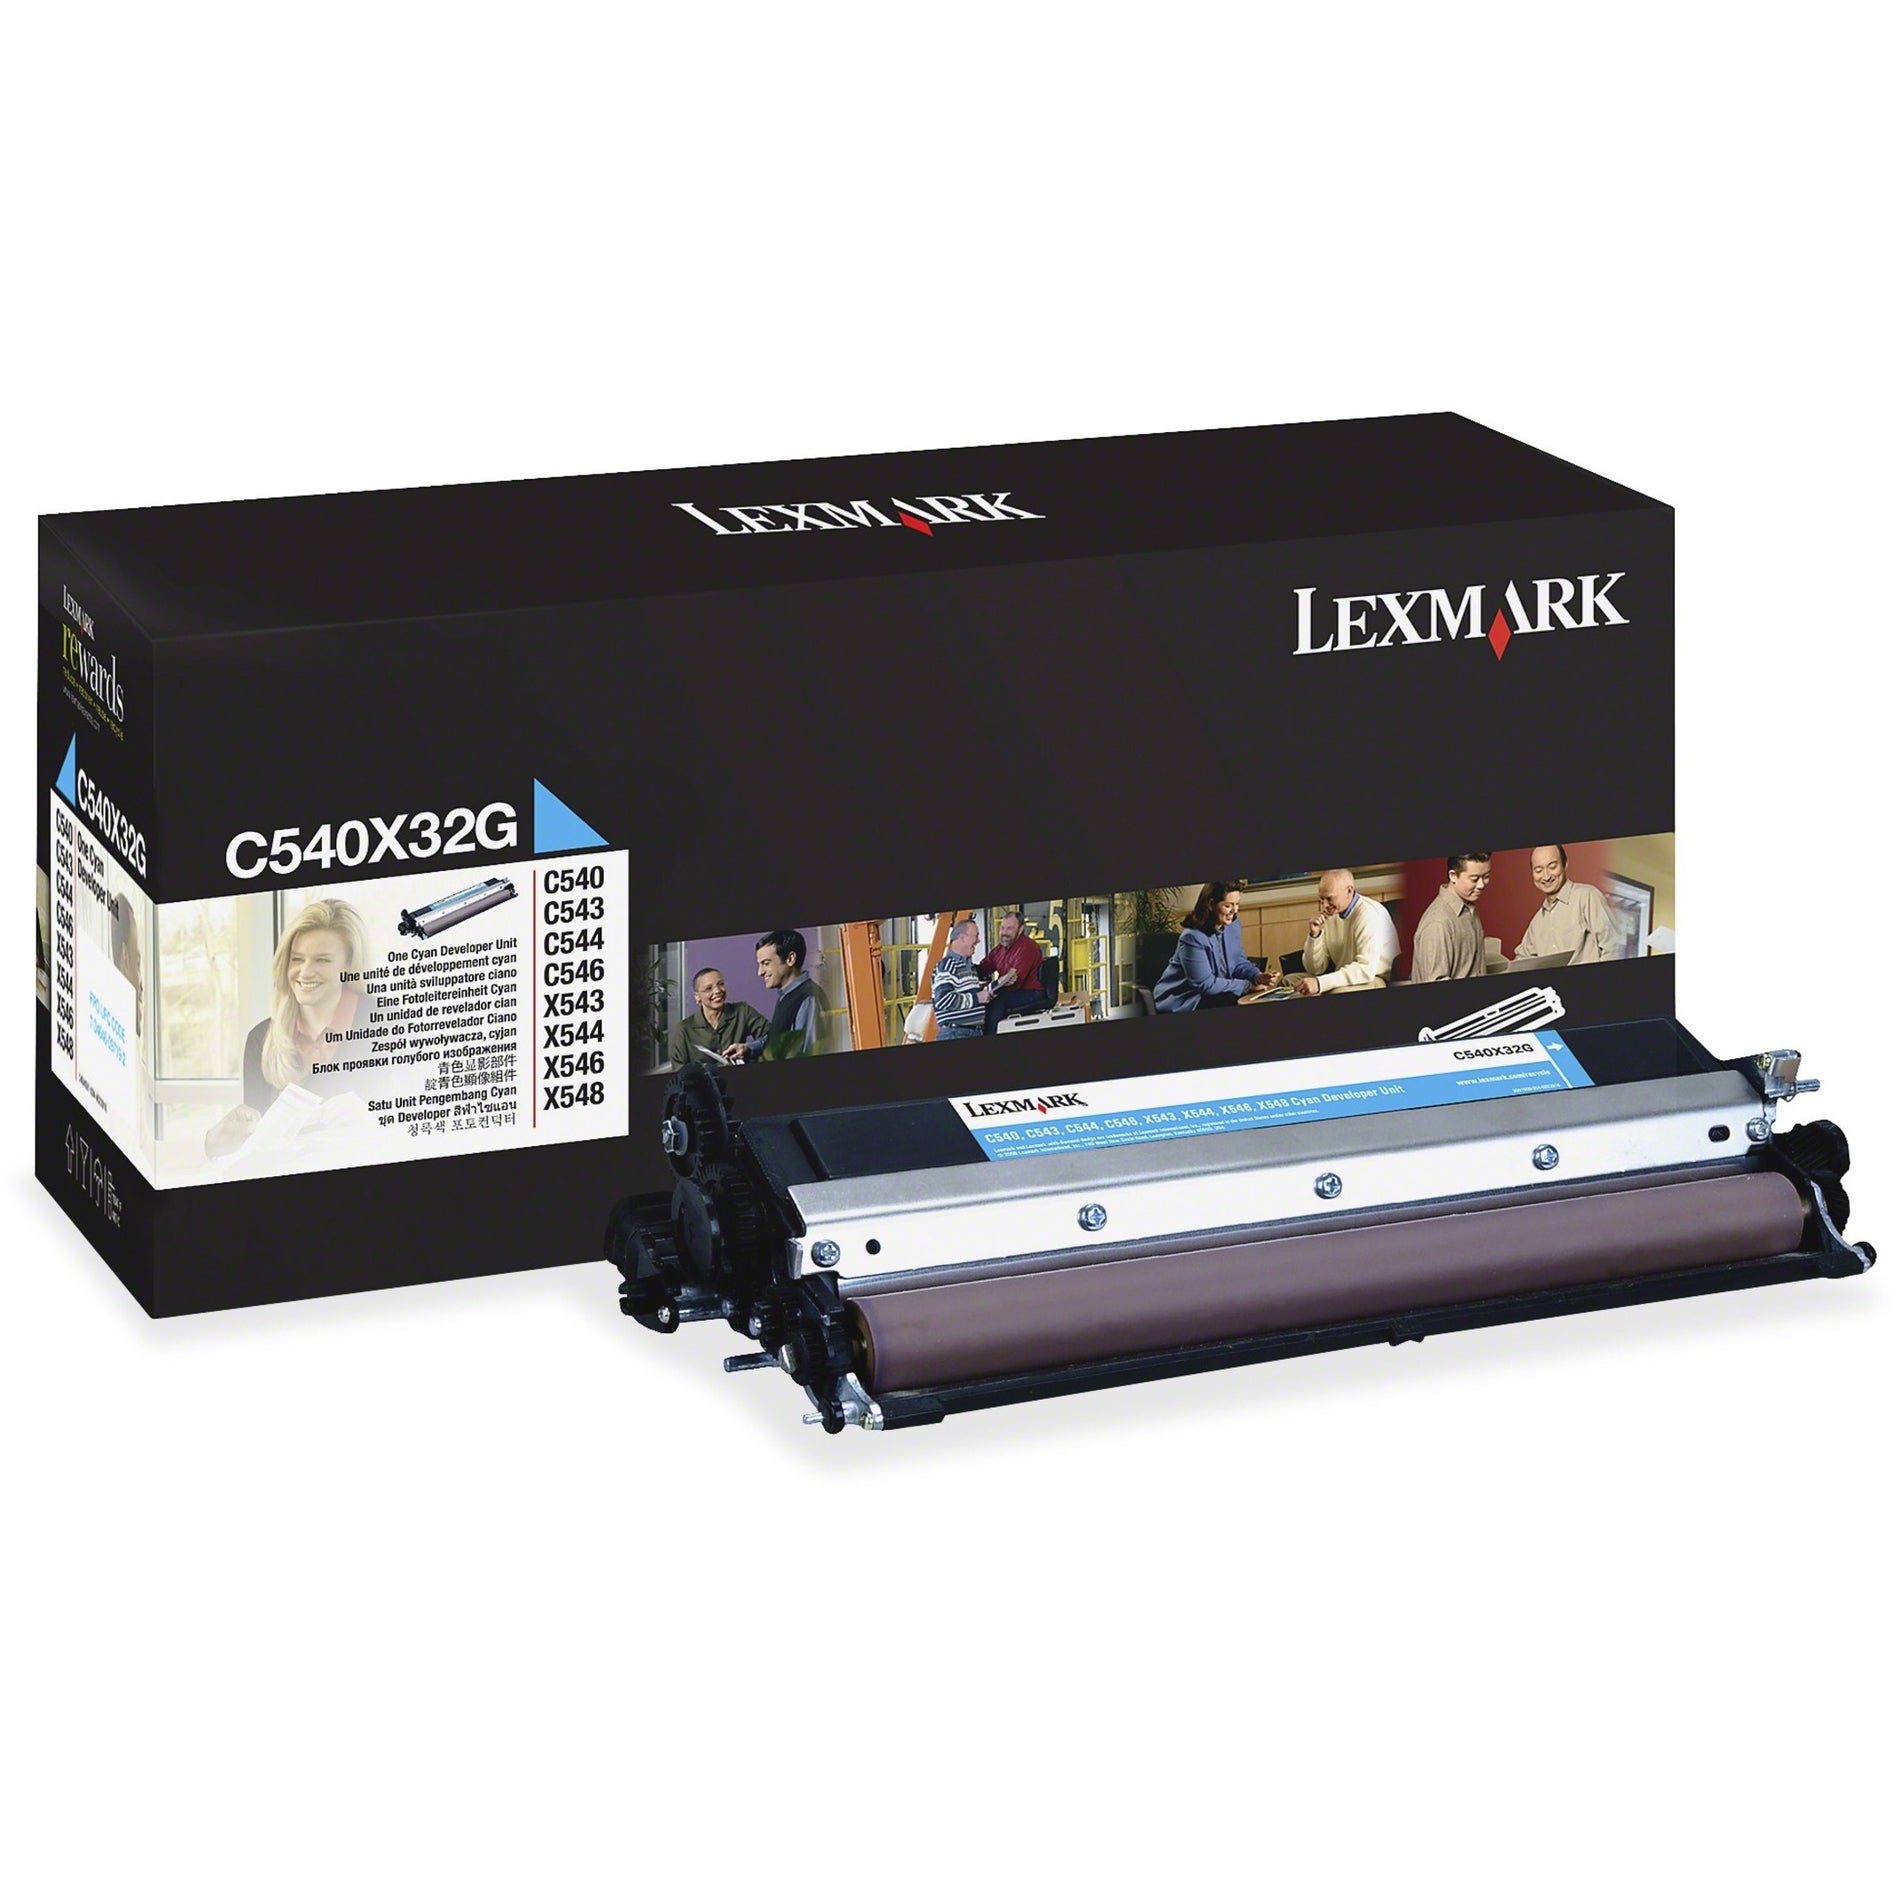 Lexmark C540X32G Cyan Developer Unit For C54X Printer - Laser, High-Quality Printing